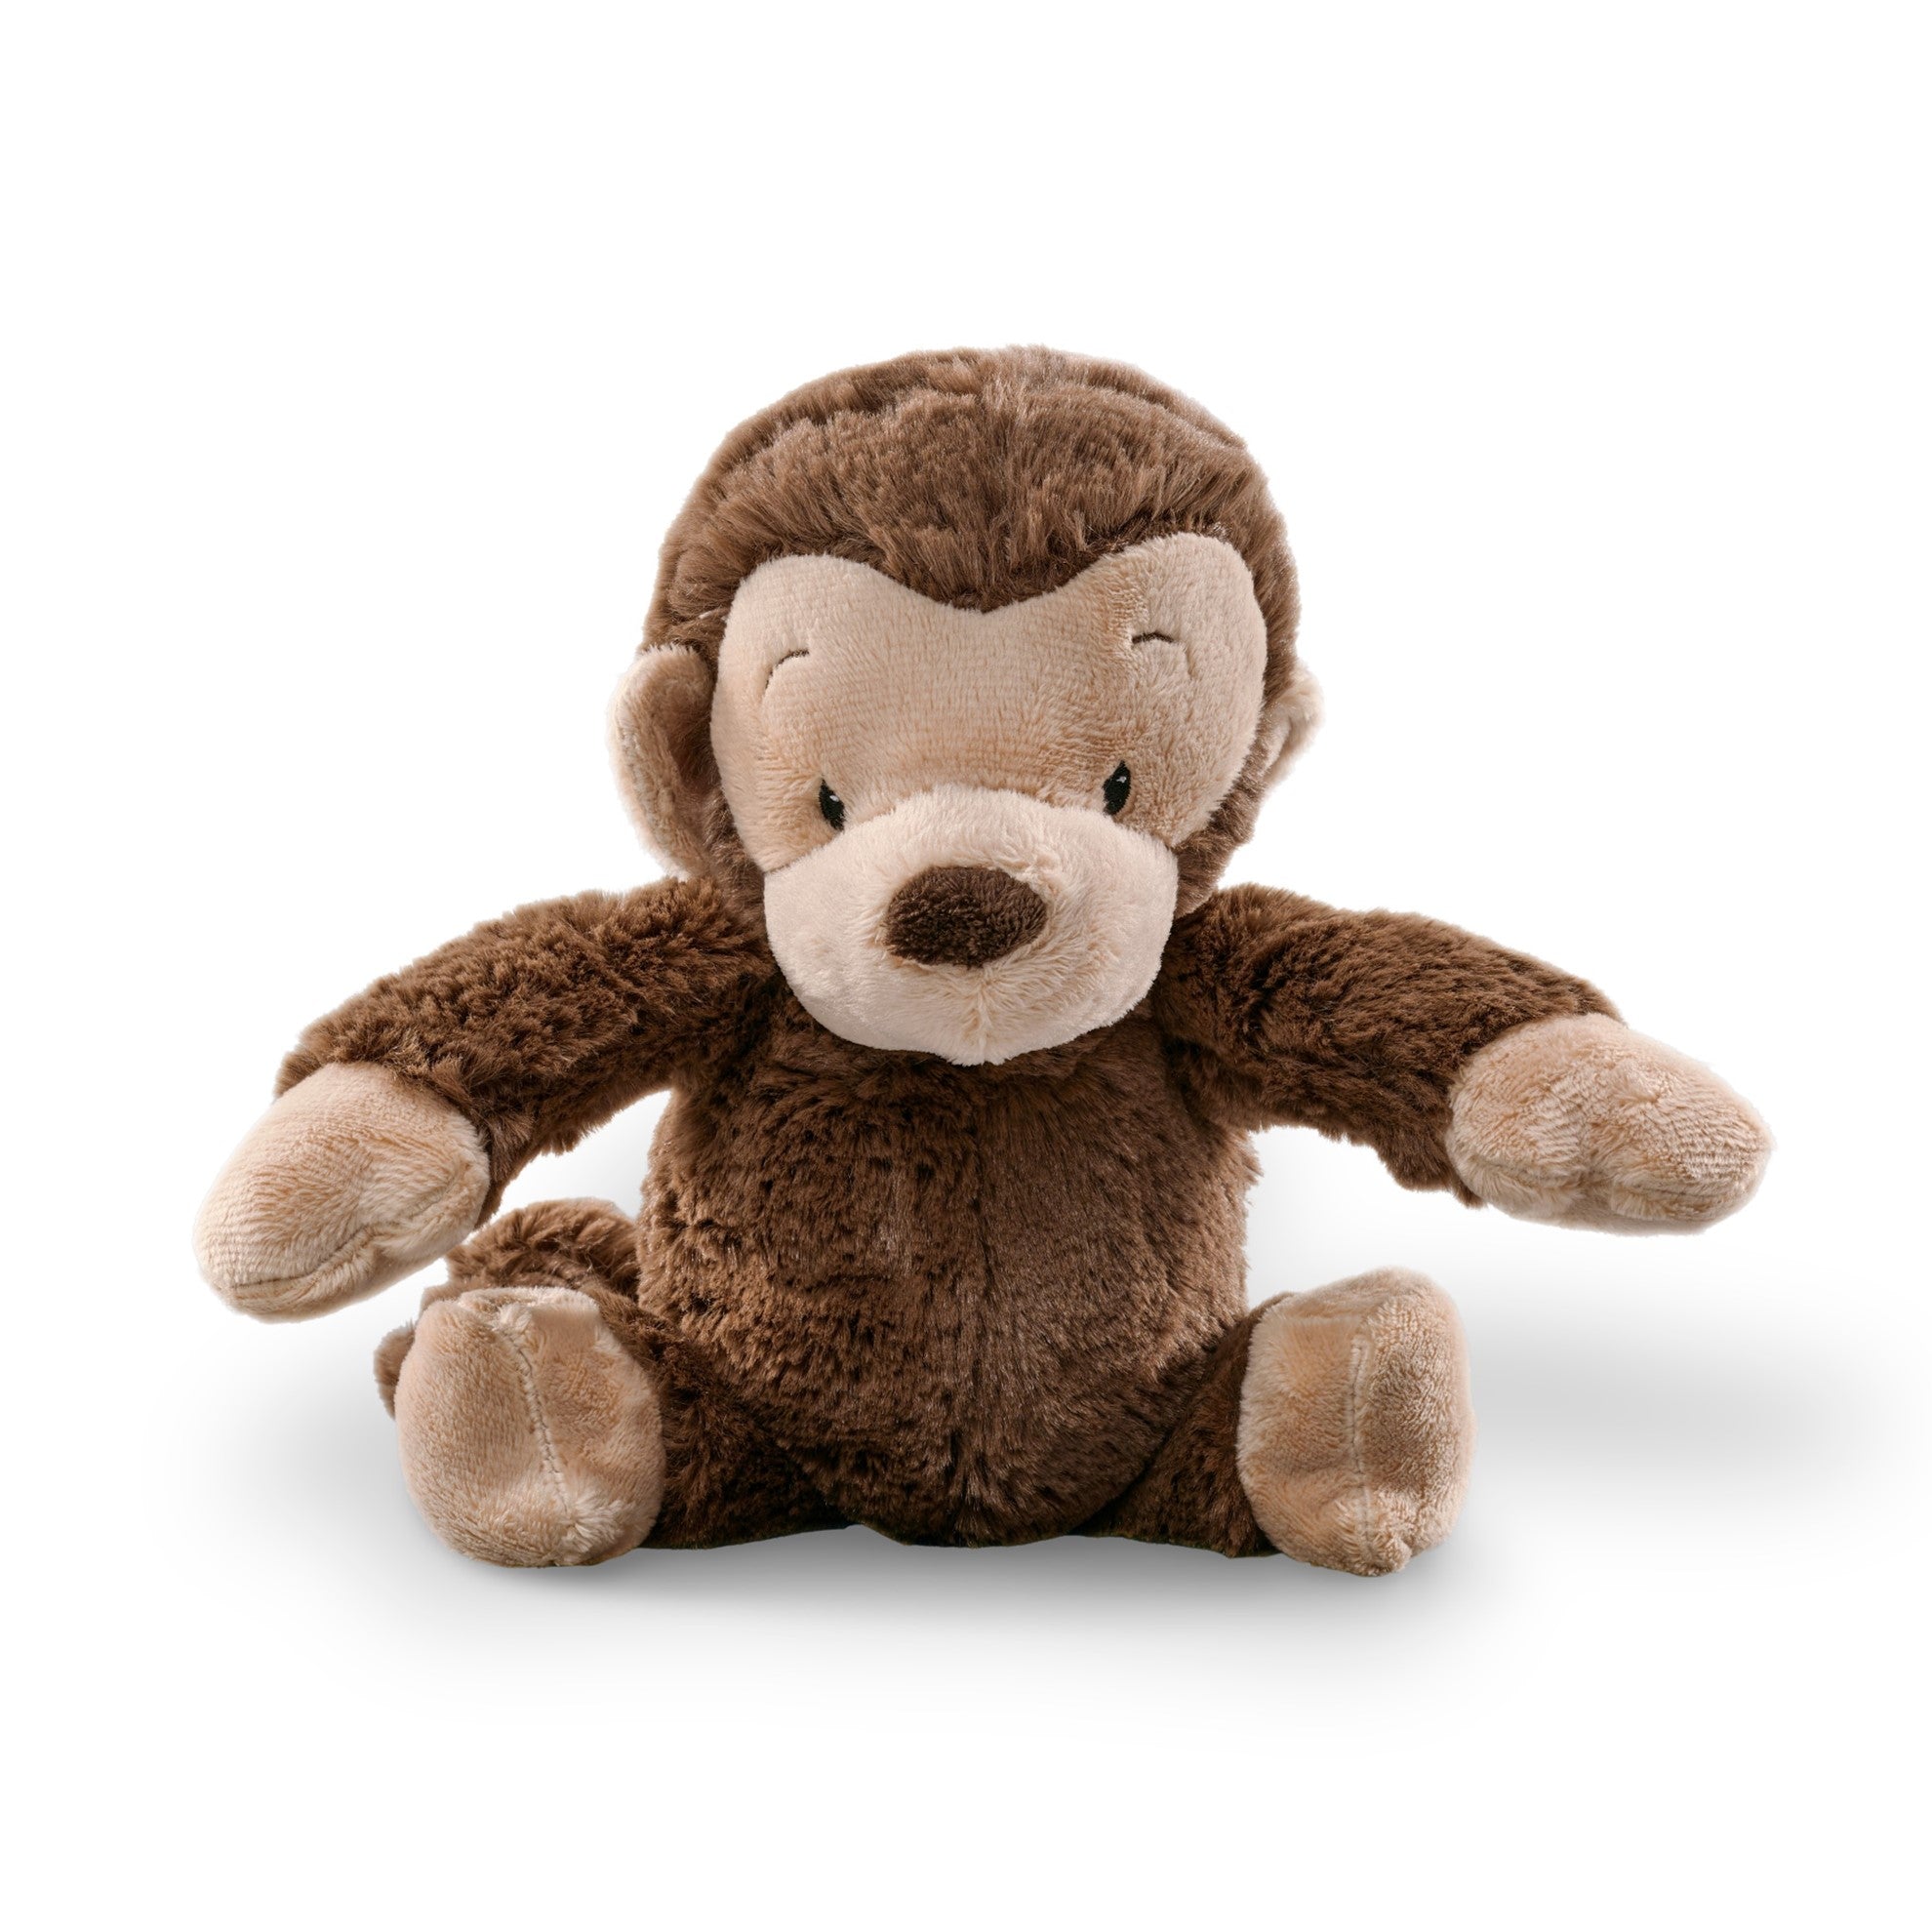 A photo of the Mago Monkey infant plush toy